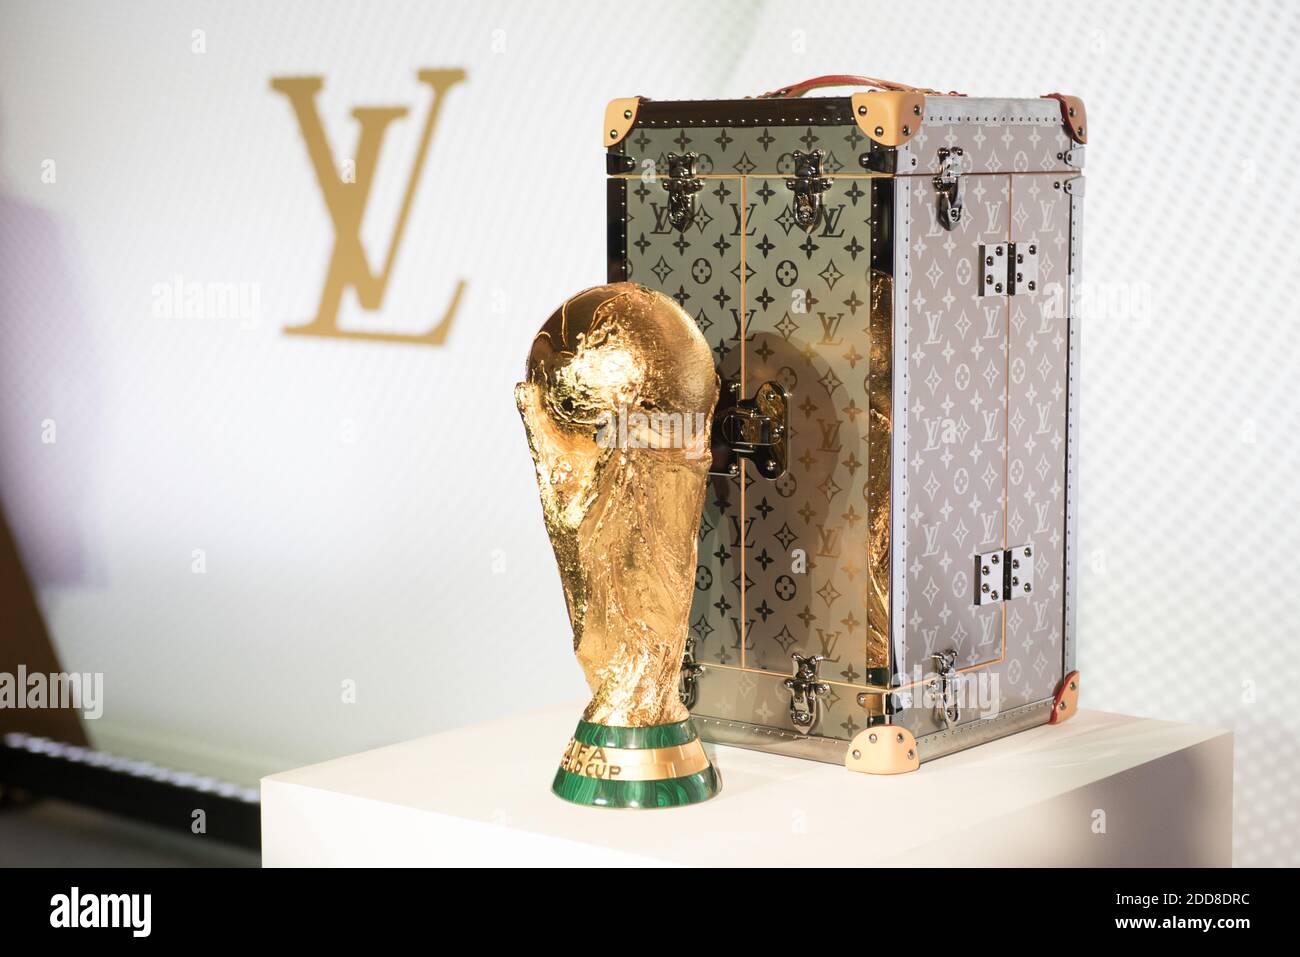 Louis Vuitton kicks off World Cup season with a trophy travel case